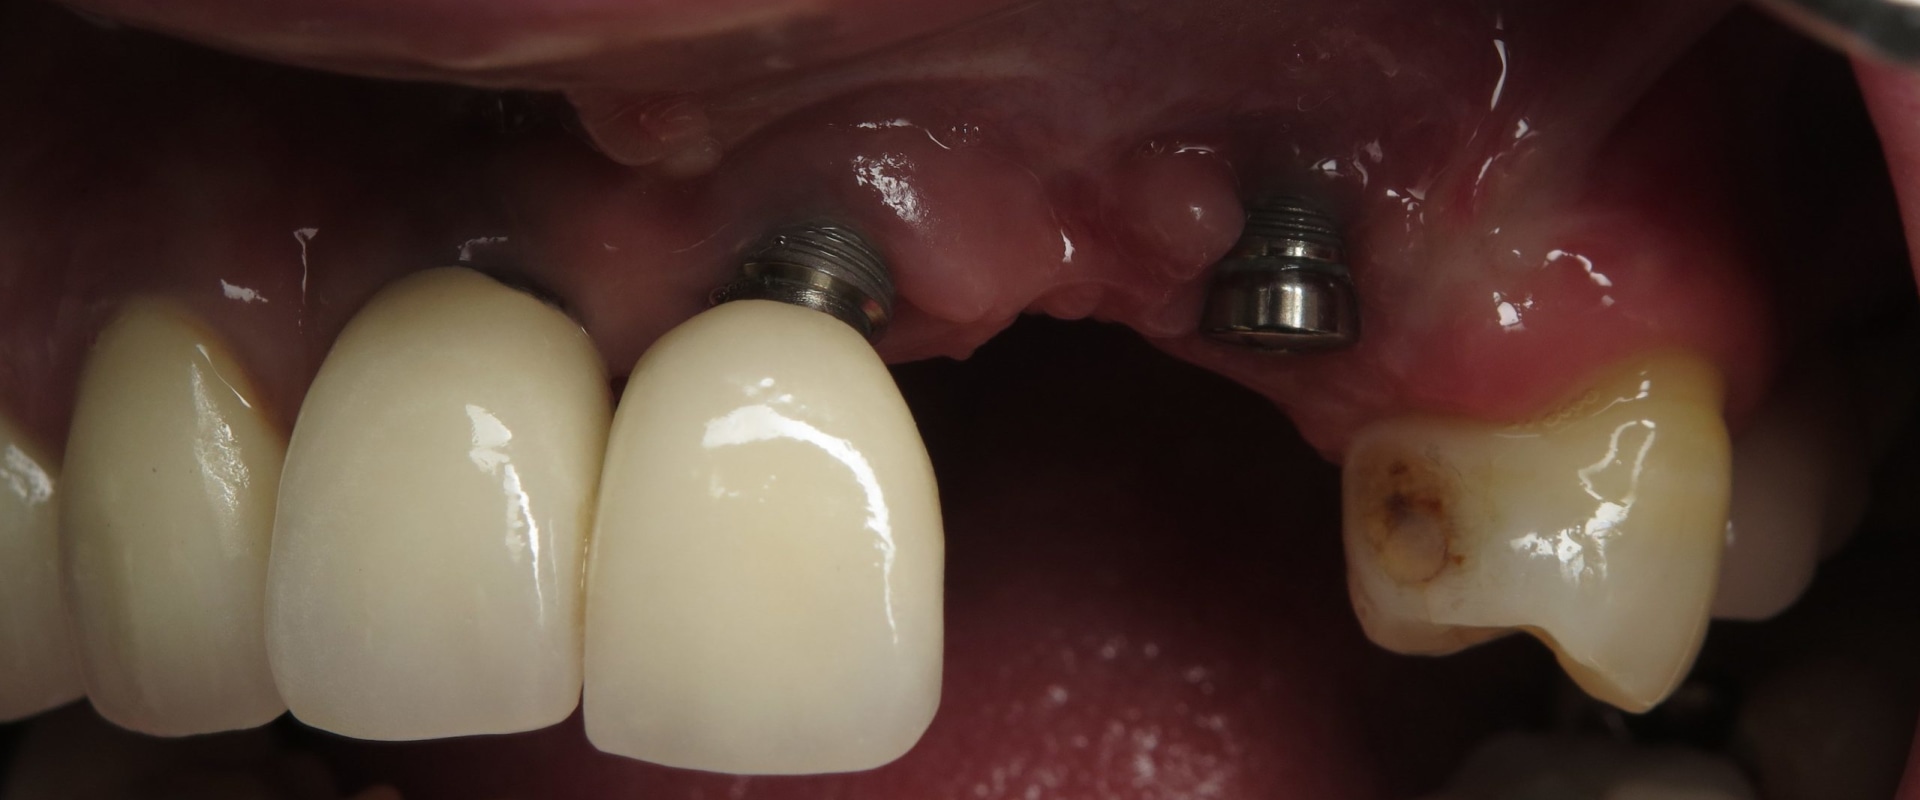 What happens when the dental implant fails?